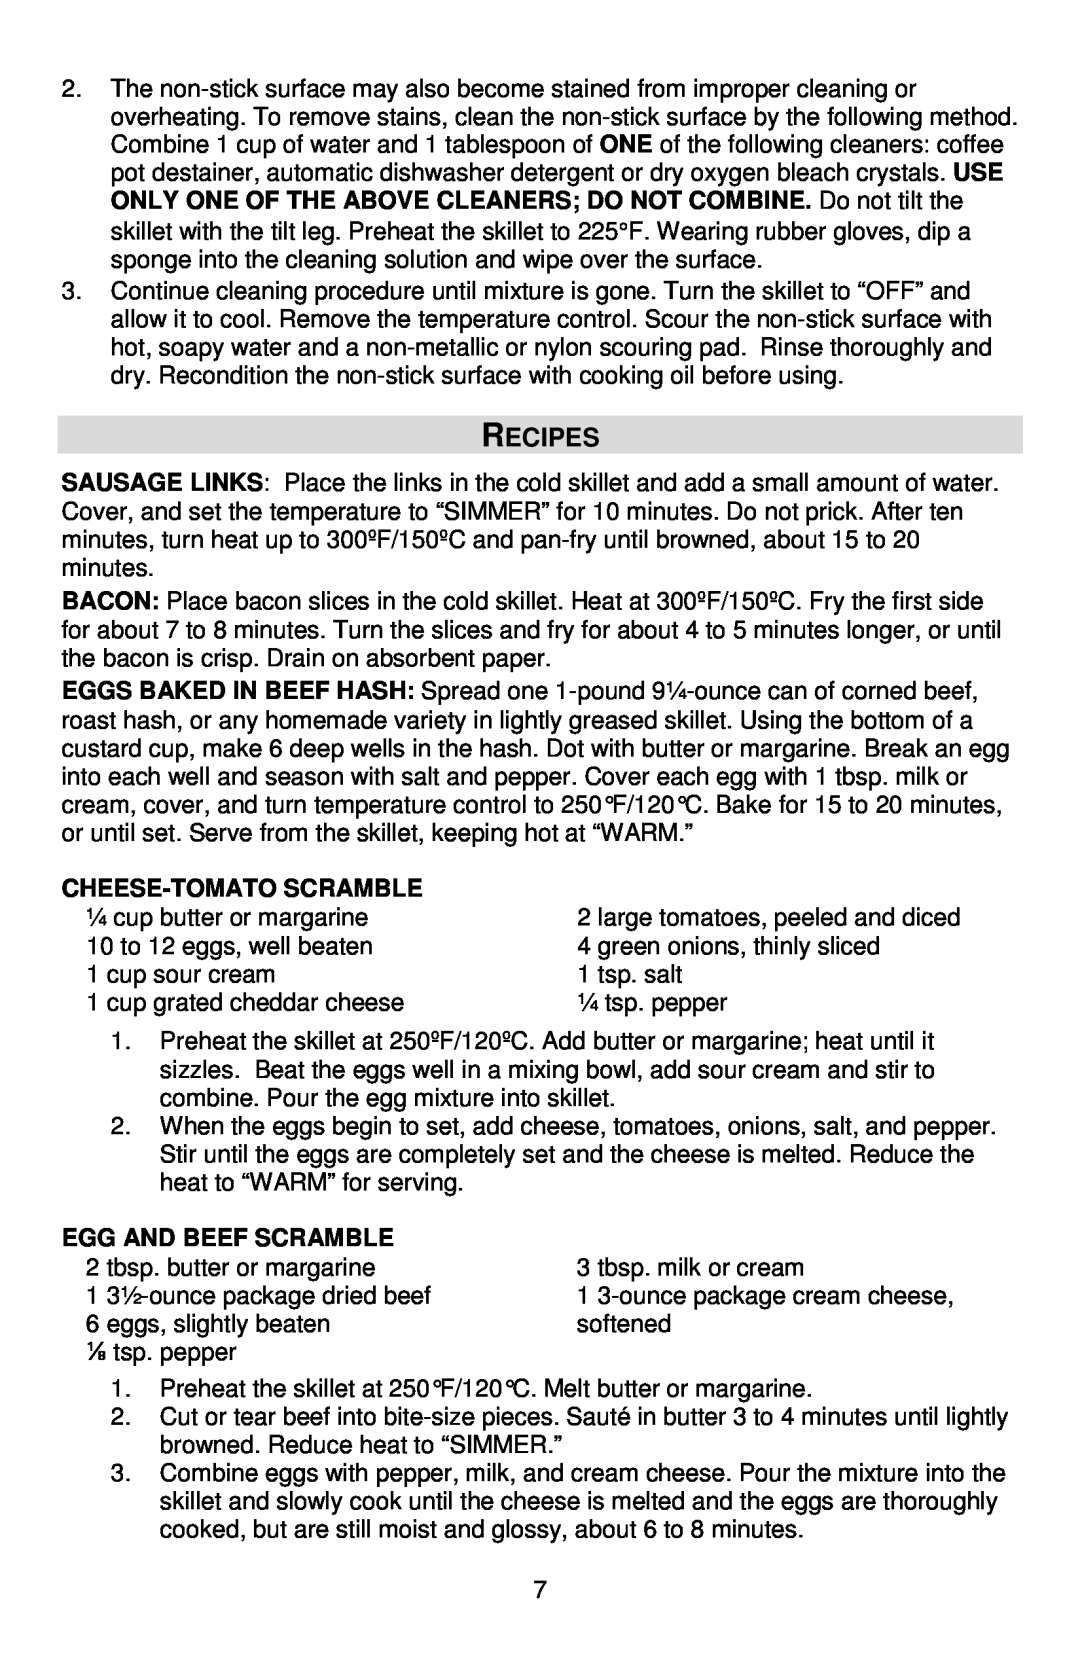 West Bend 72212, L5791B instruction manual Recipes, Cheese-Tomatoscramble, Egg And Beef Scramble 